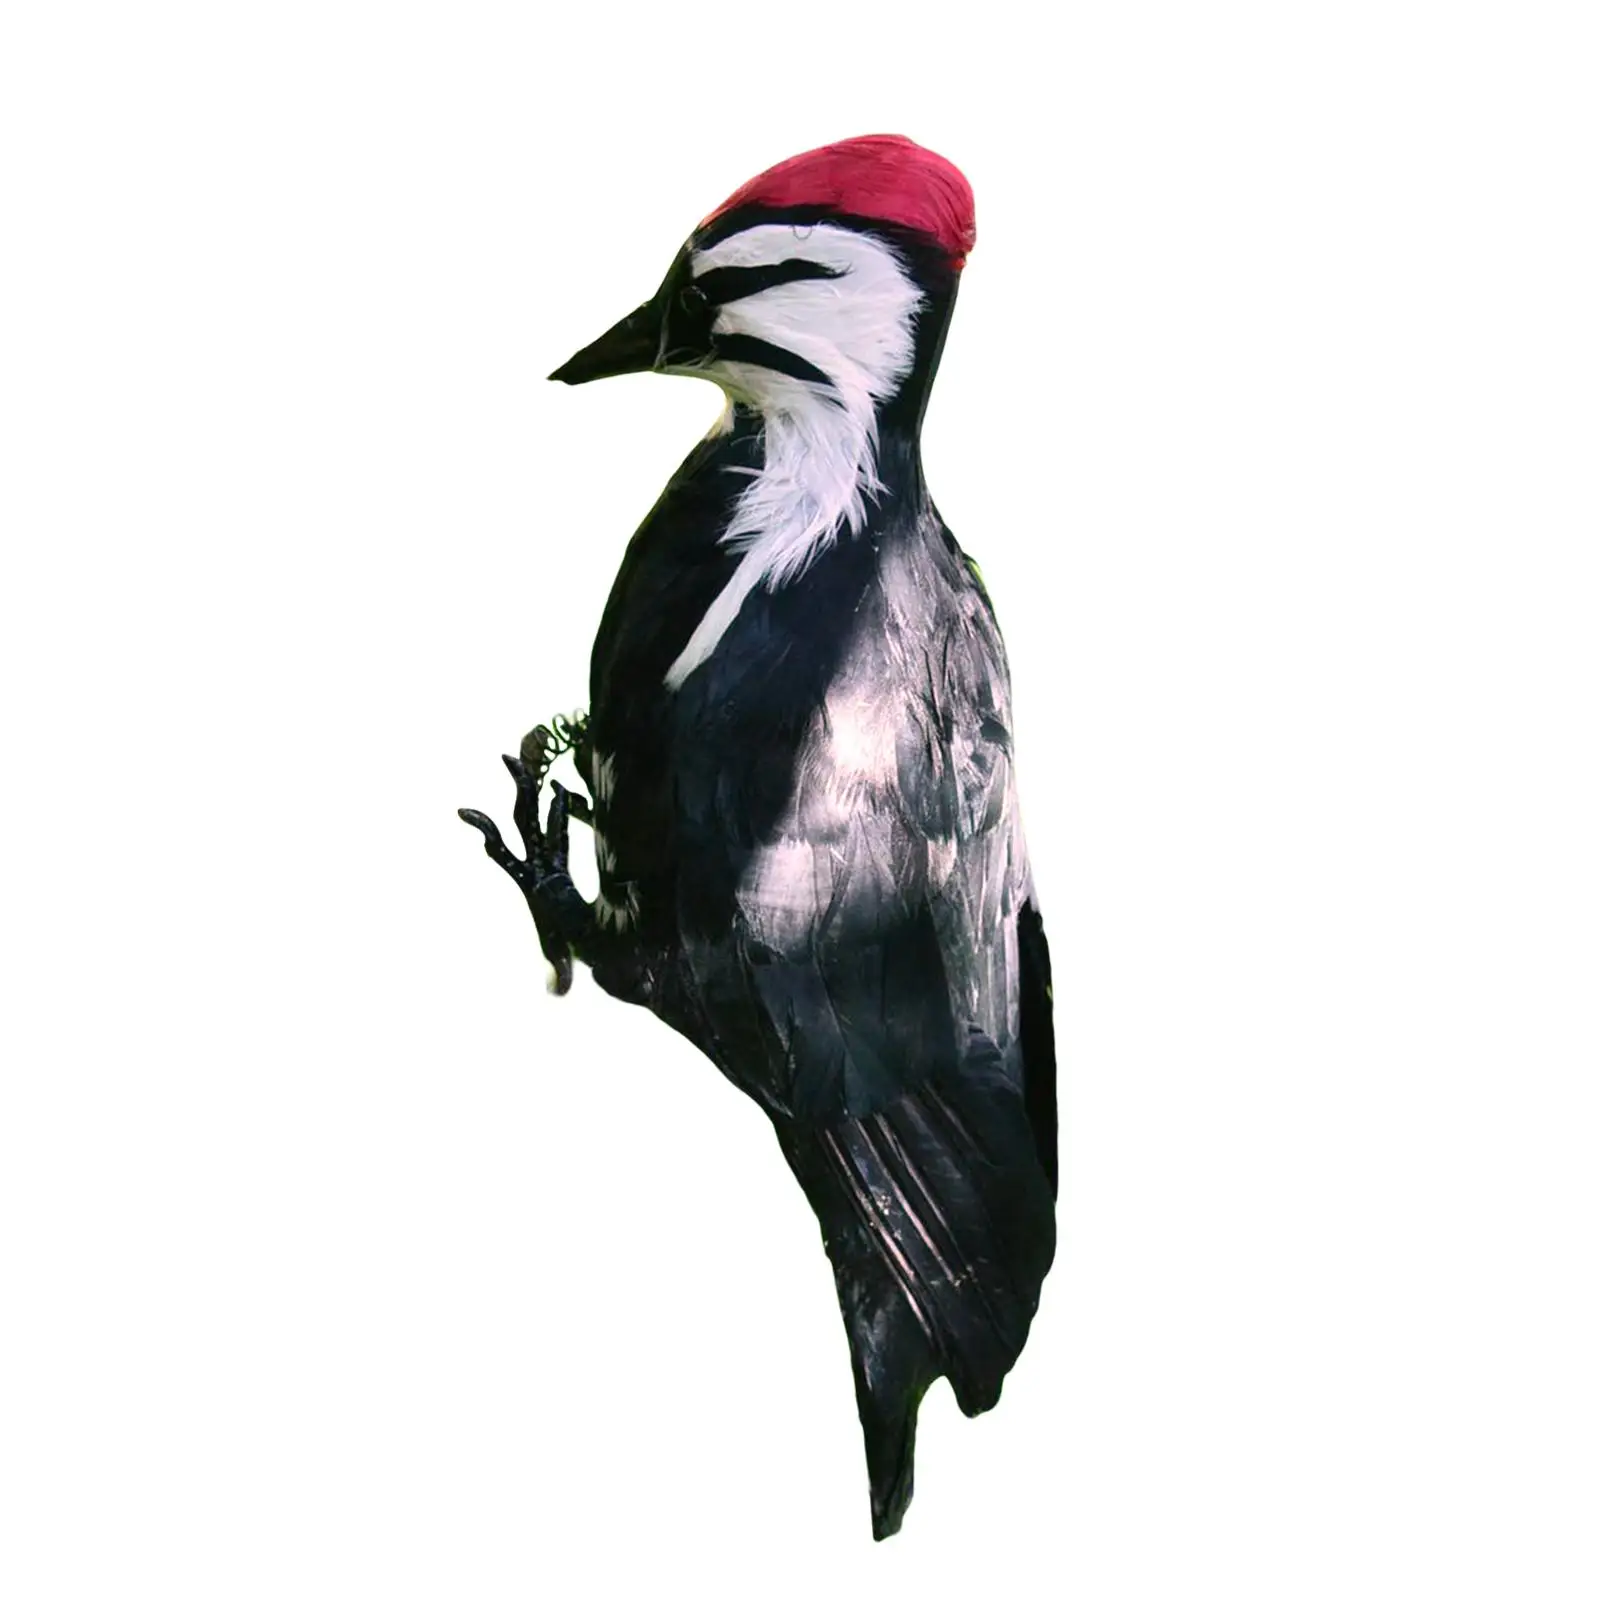 Simulation Woodpecker Bird Toys Artificial Handcrafted Art Spring Model Statue Sculpture for Home Yard Garden Decor Ornament